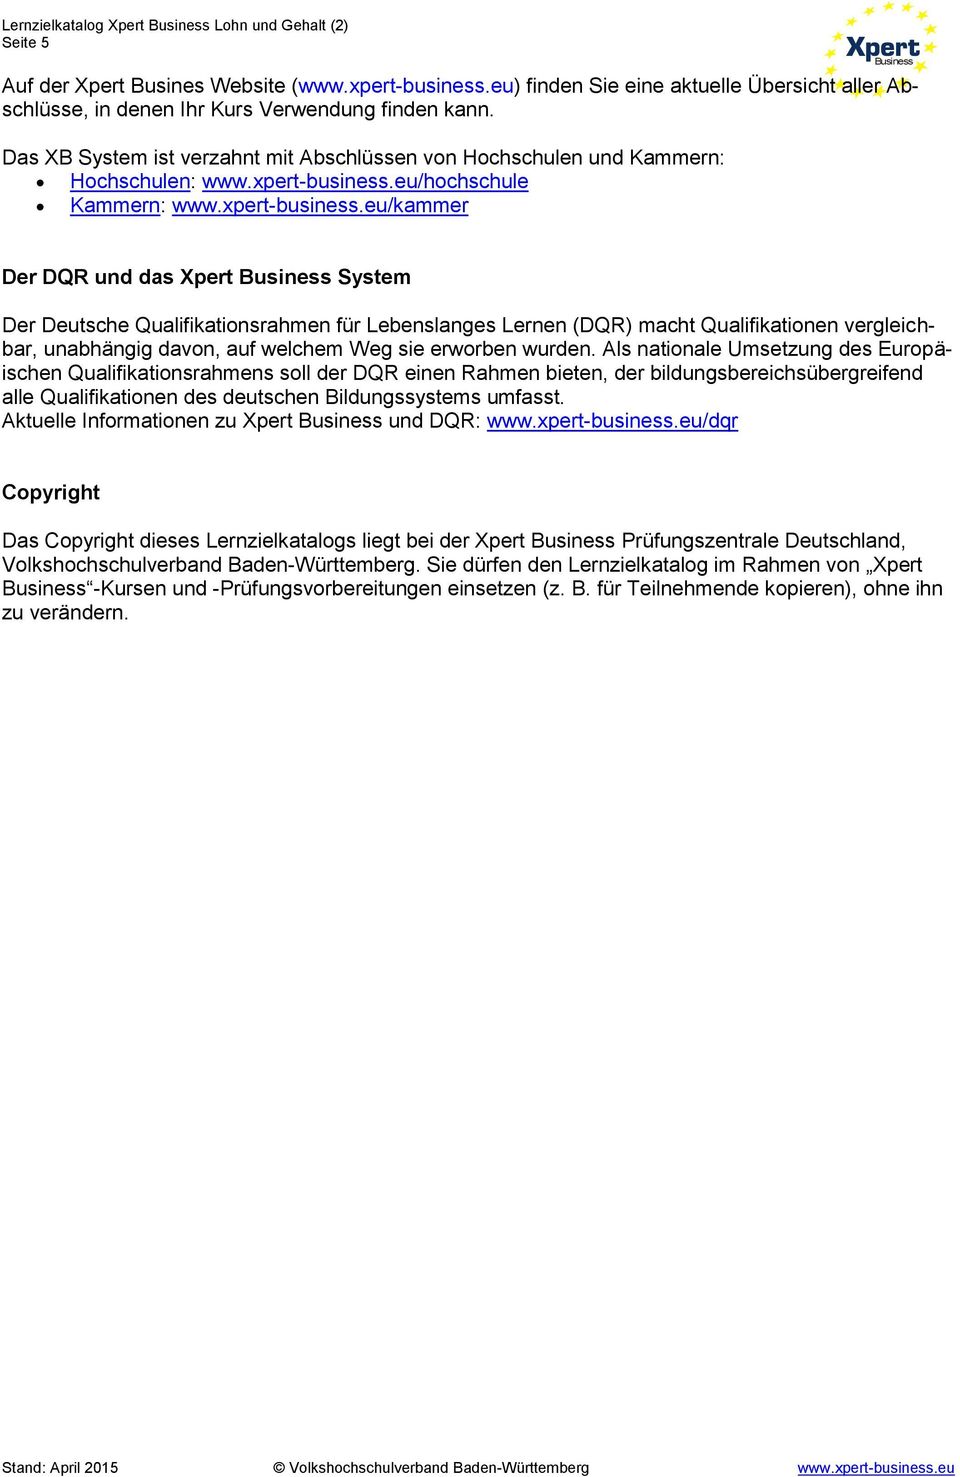 eu/hochschule Kammern: www.xpert-business.